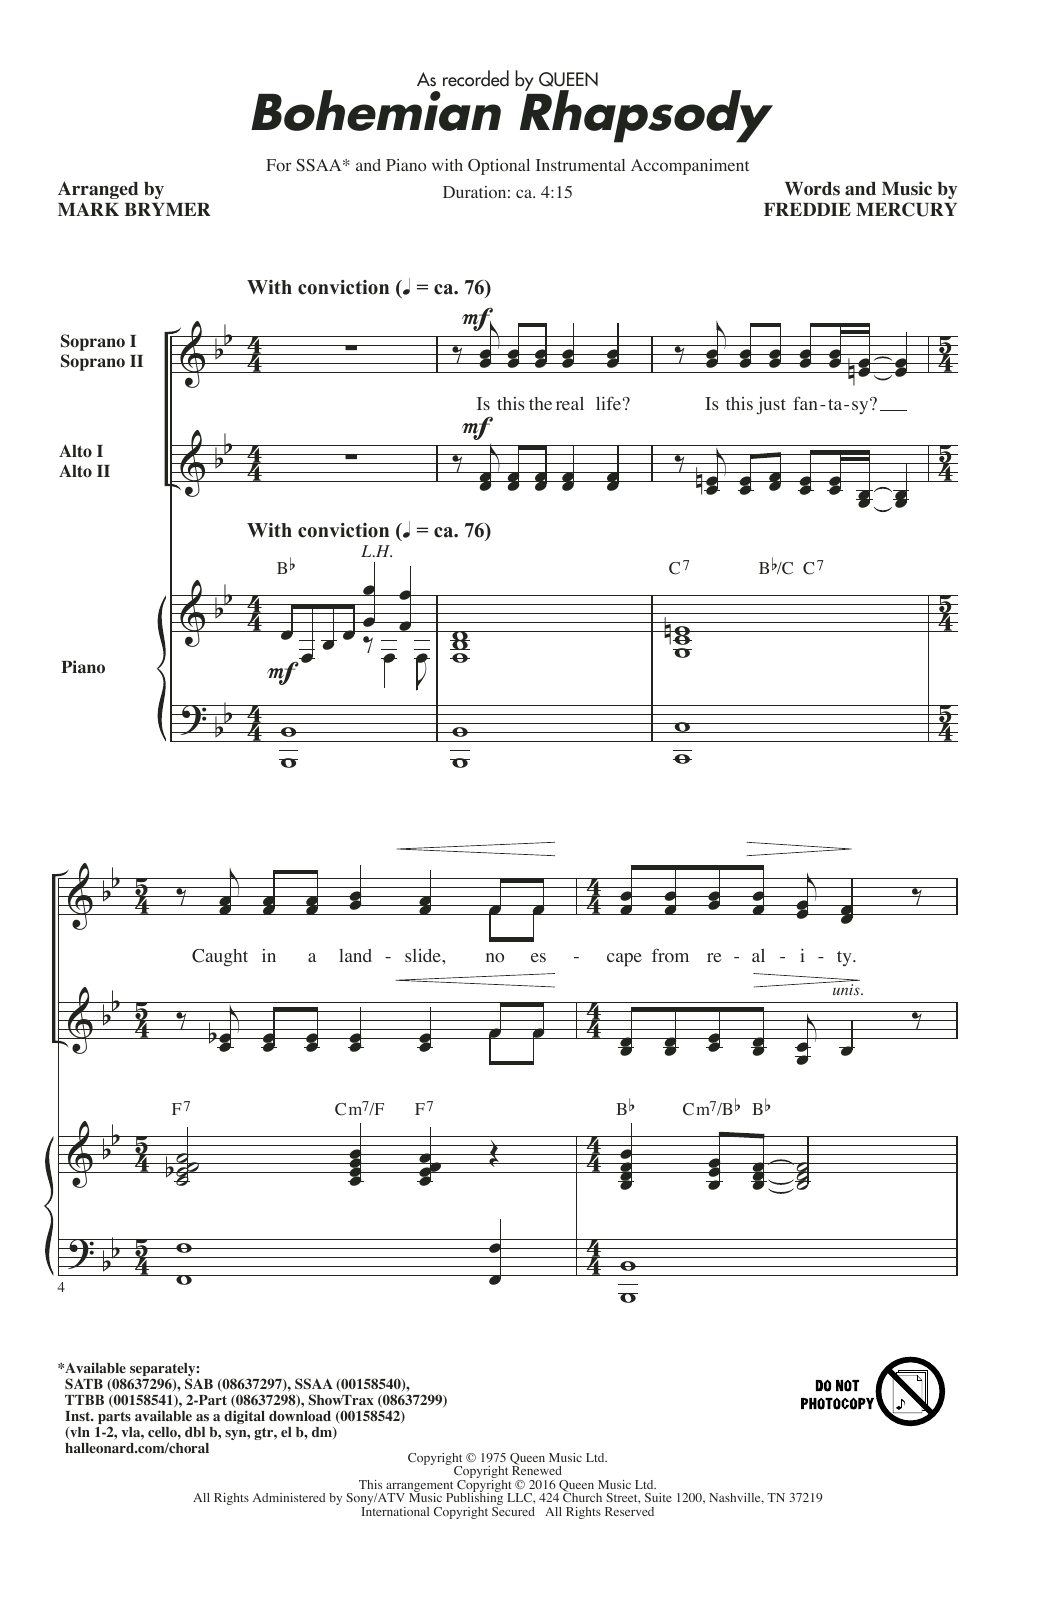 Queen Bohemian Rhapsody (arr. Mark Brymer) sheet music notes and chords arranged for SAB Choir